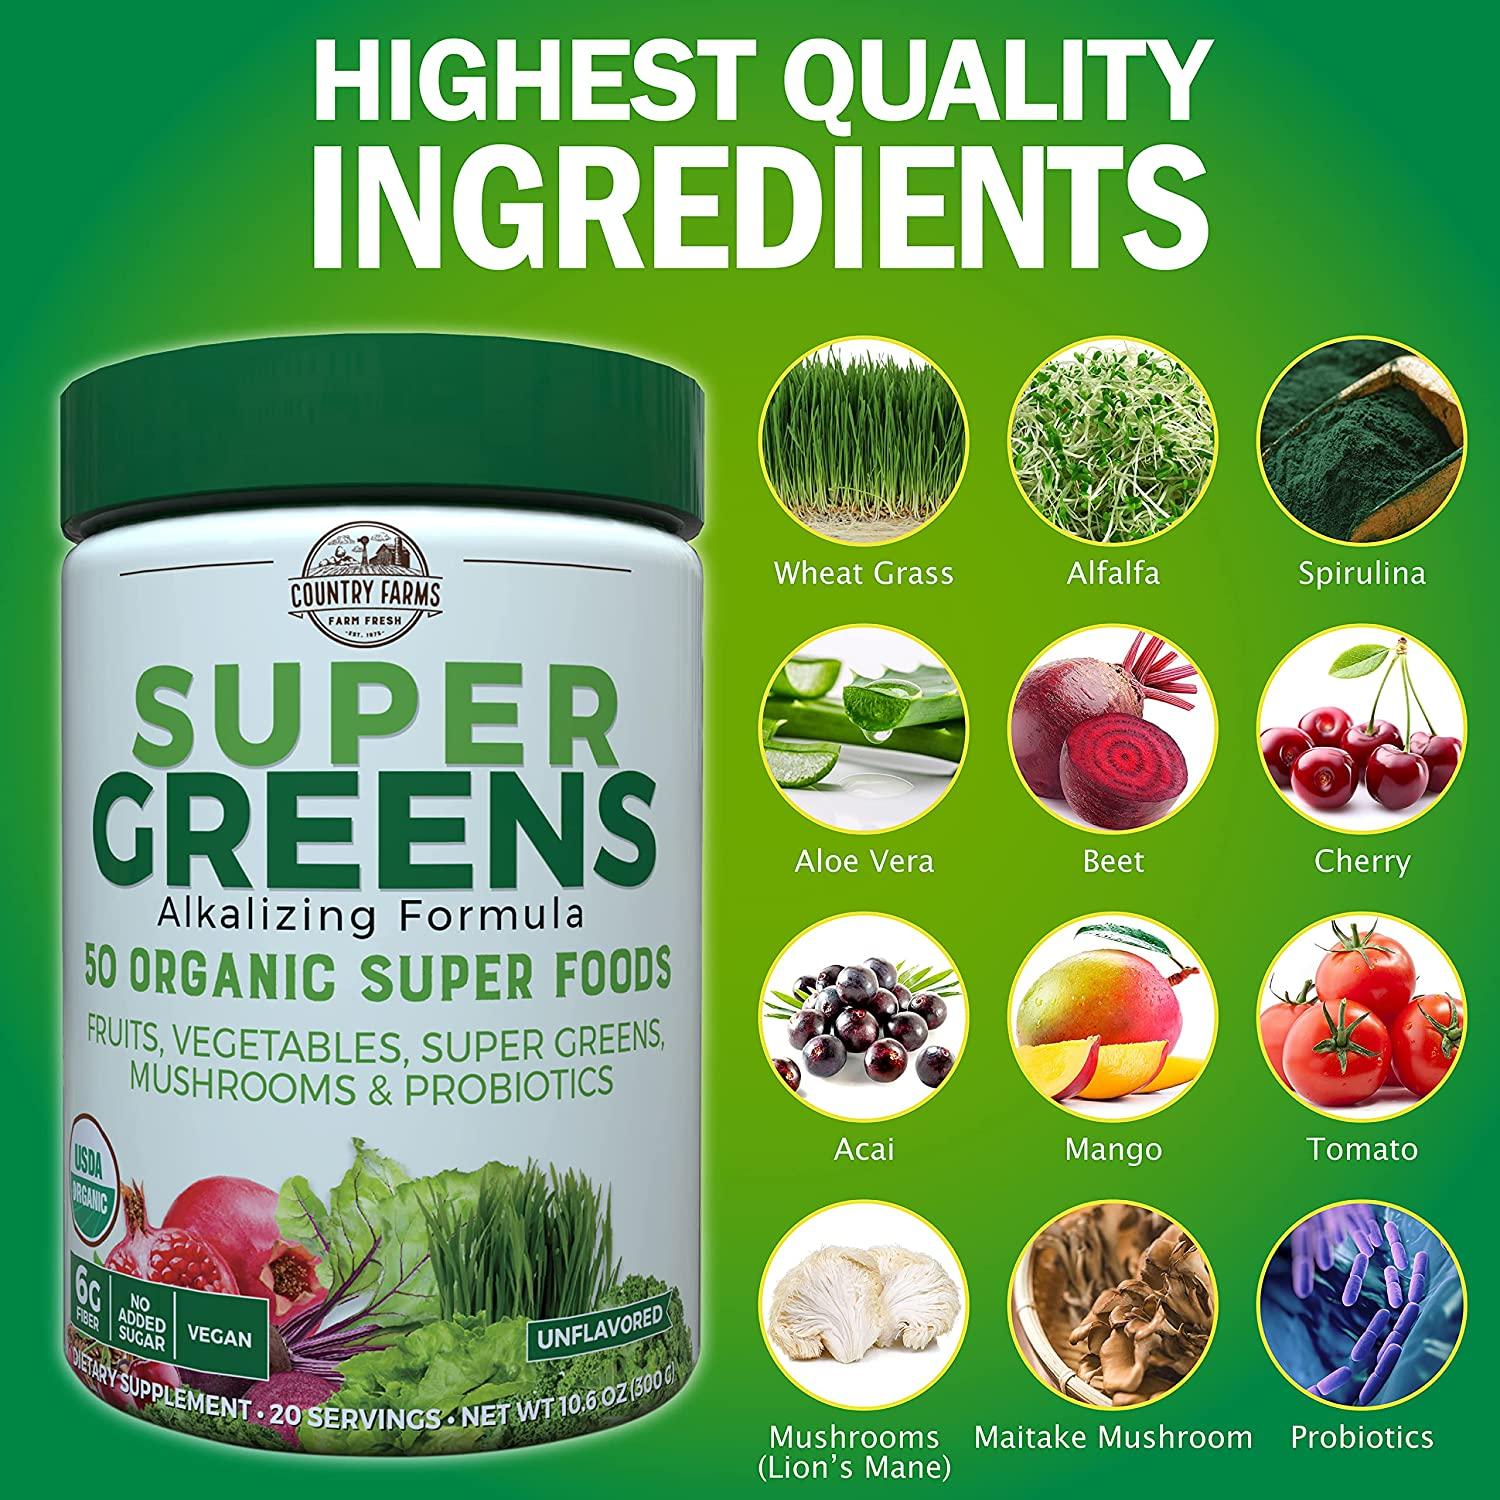 Organic Super Greens Powder